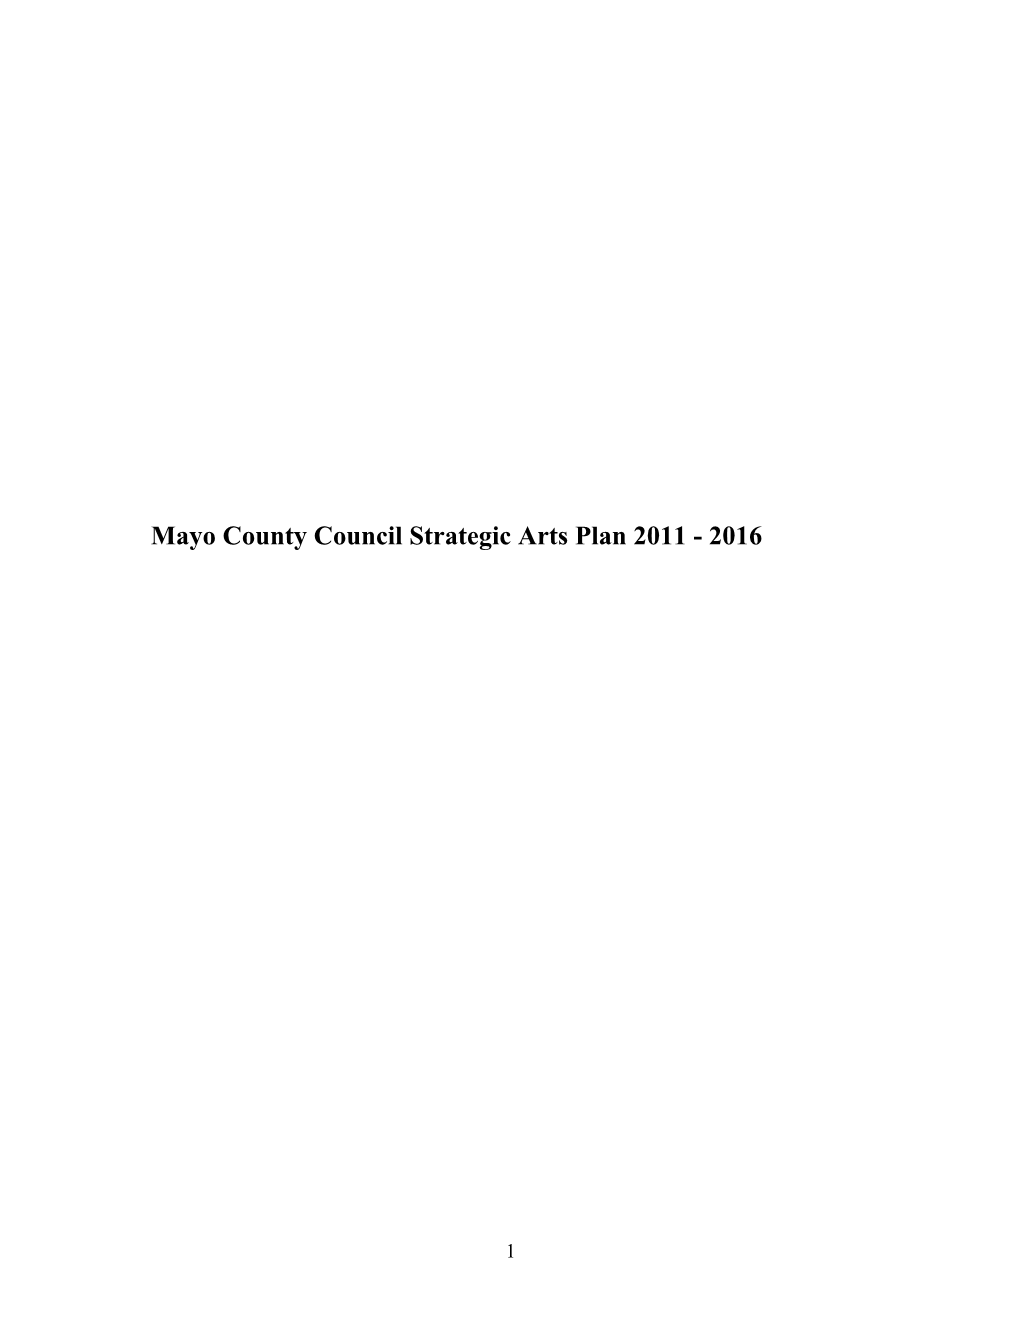 Mayo County Council Strategic Arts Plan 2011 - 2015